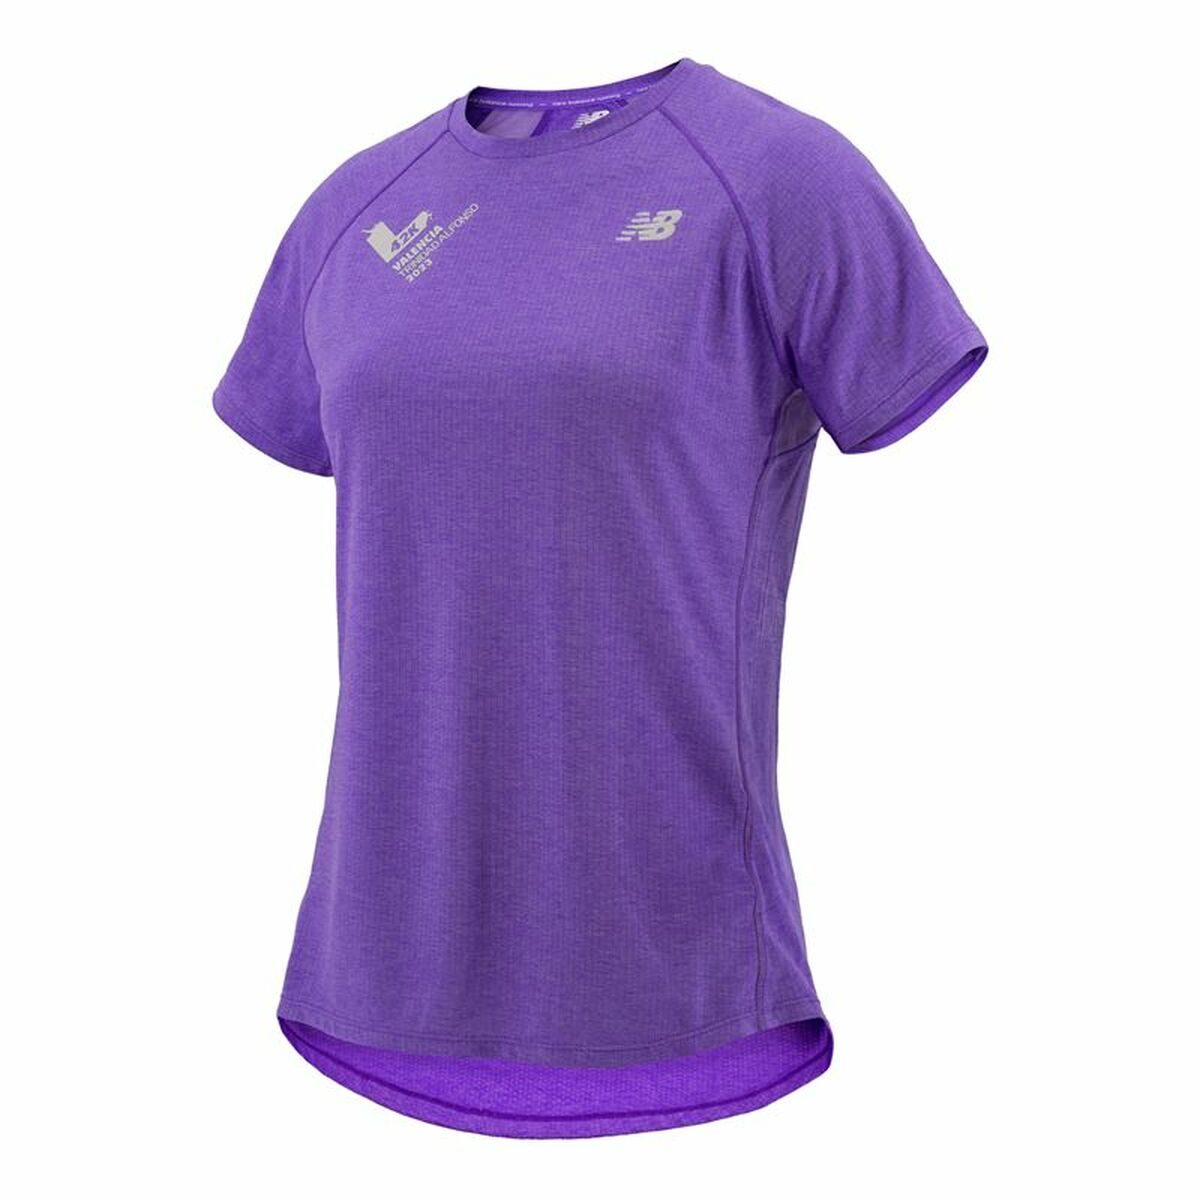 Women’s Short Sleeve T-Shirt New Balance Valencia Marathon Purple